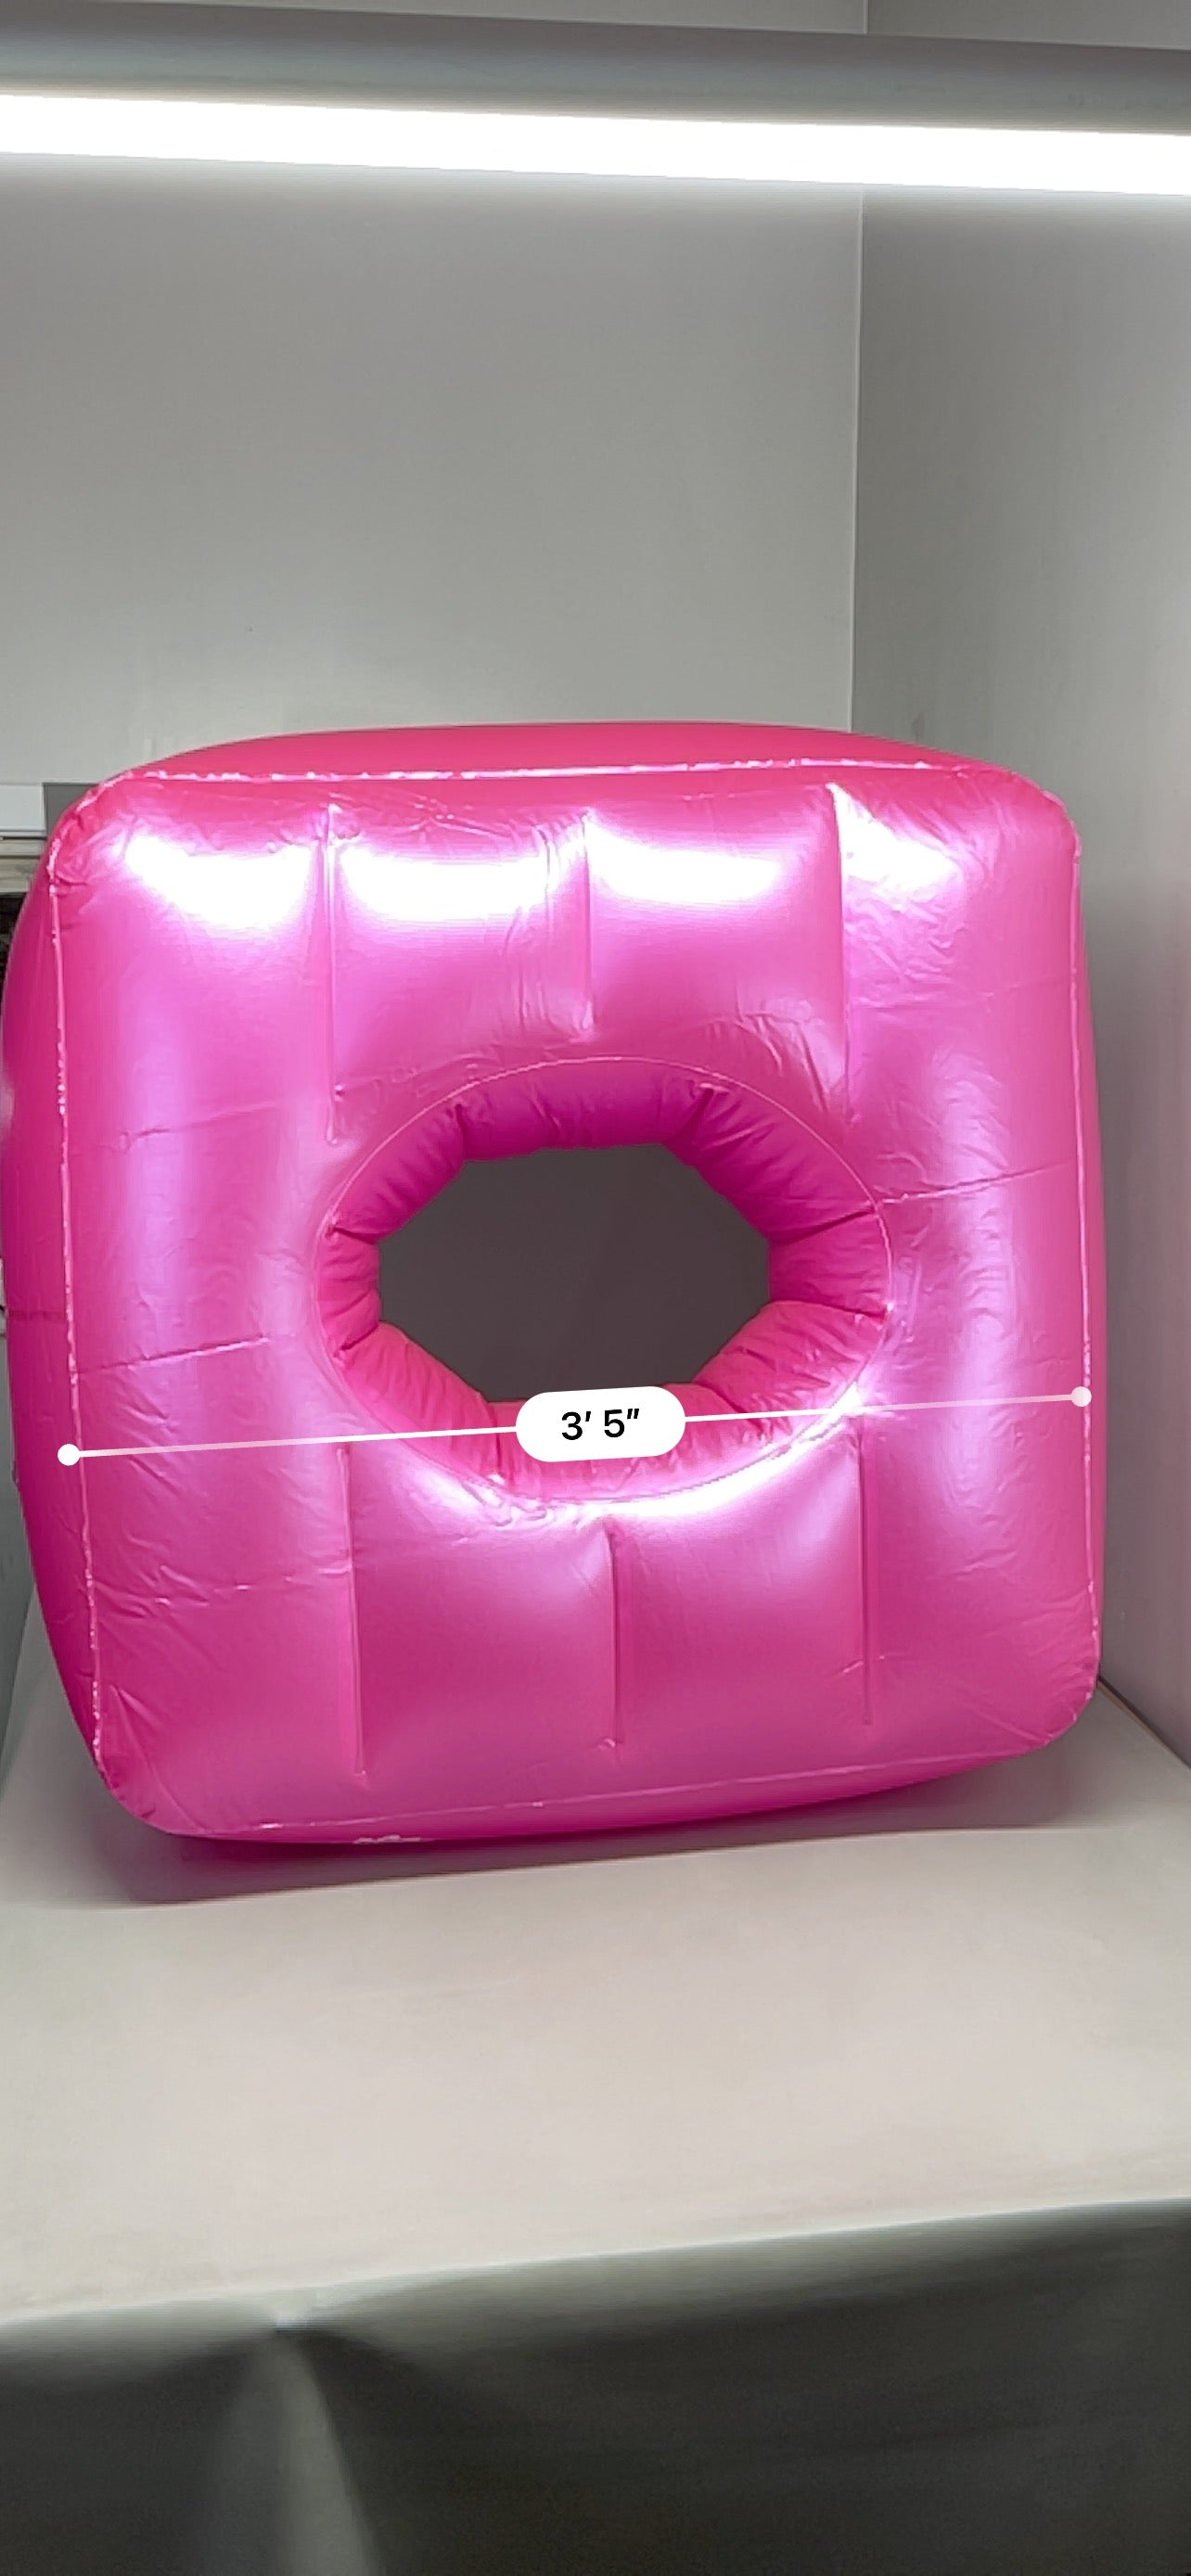 ZA@ BOOTY BEAN BAG BBL Small Inflatable Air Mattress Pink 22" Square (New)